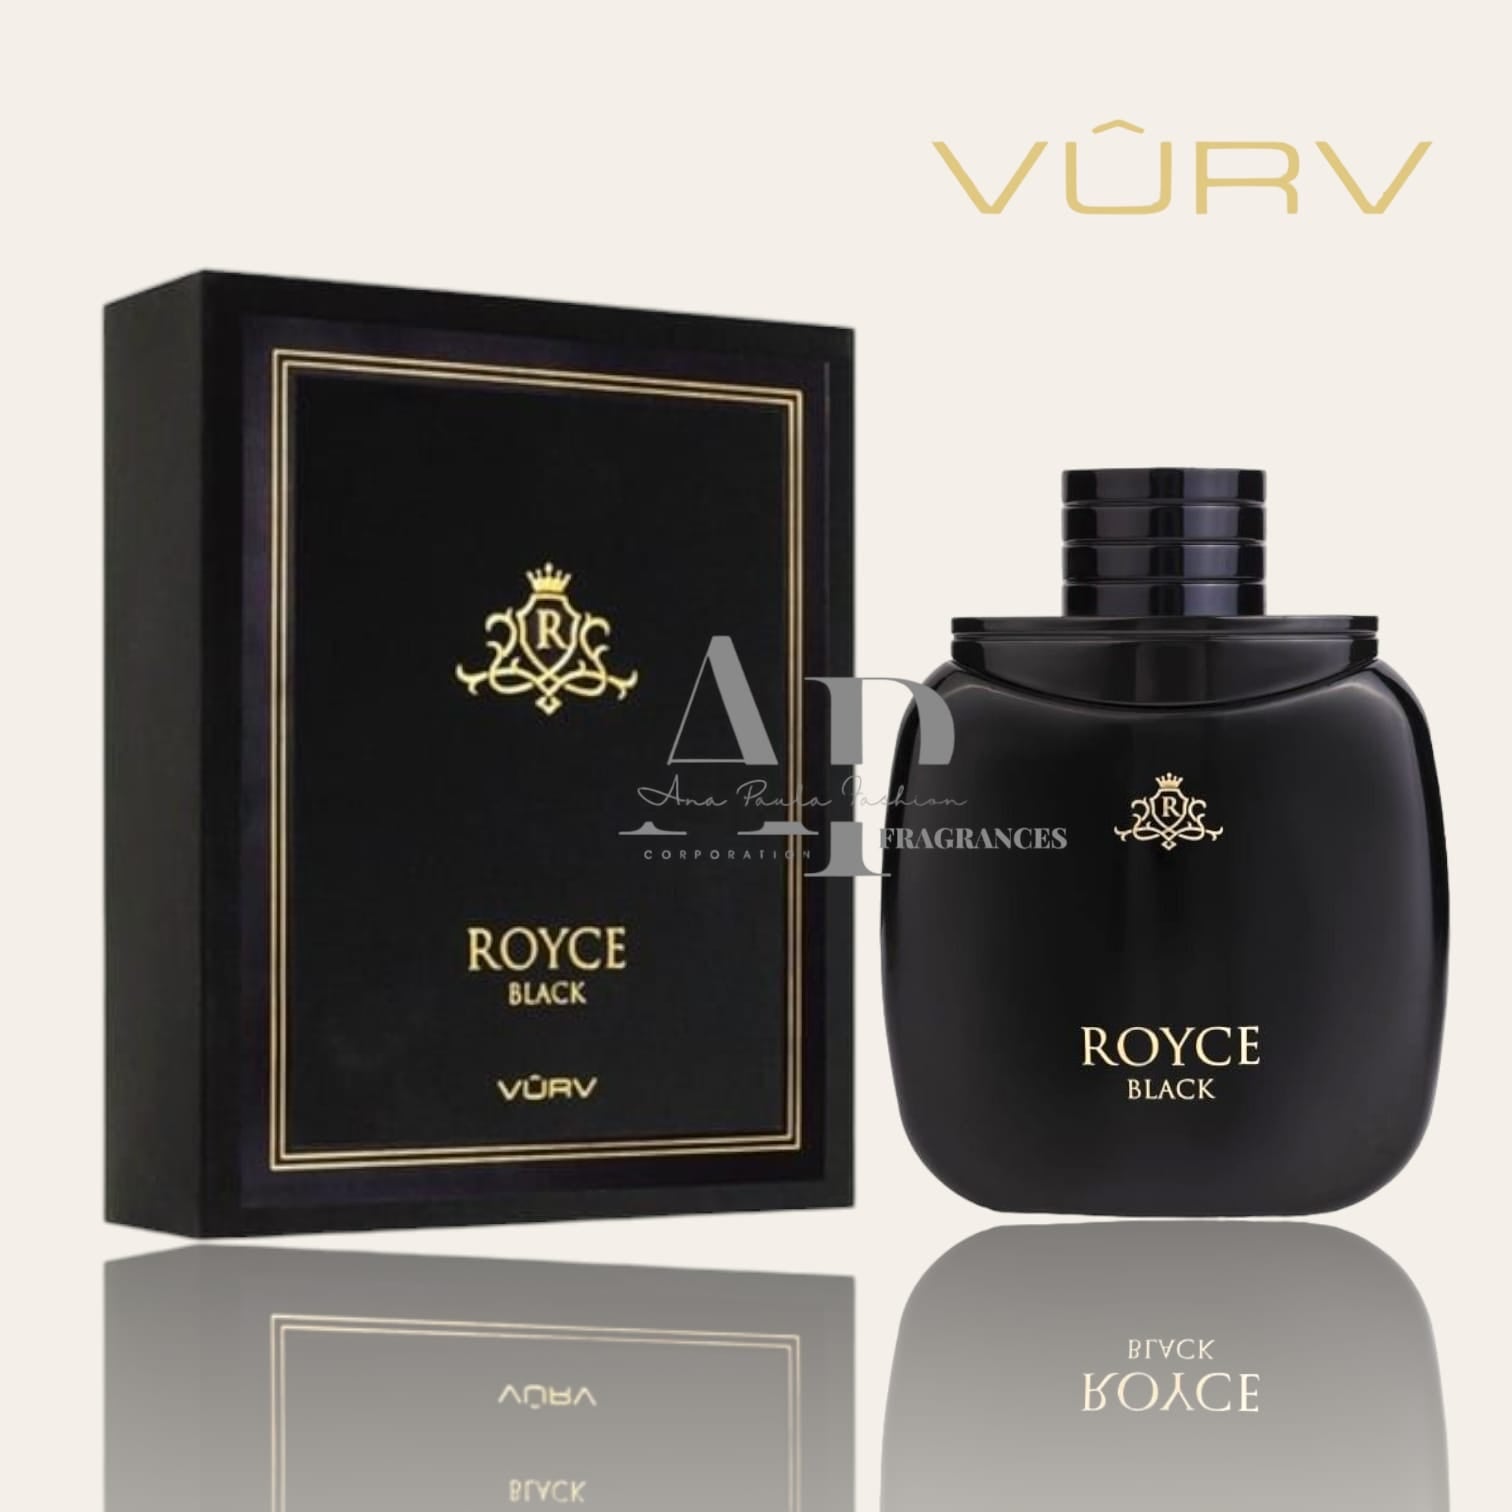 royce blue perfume